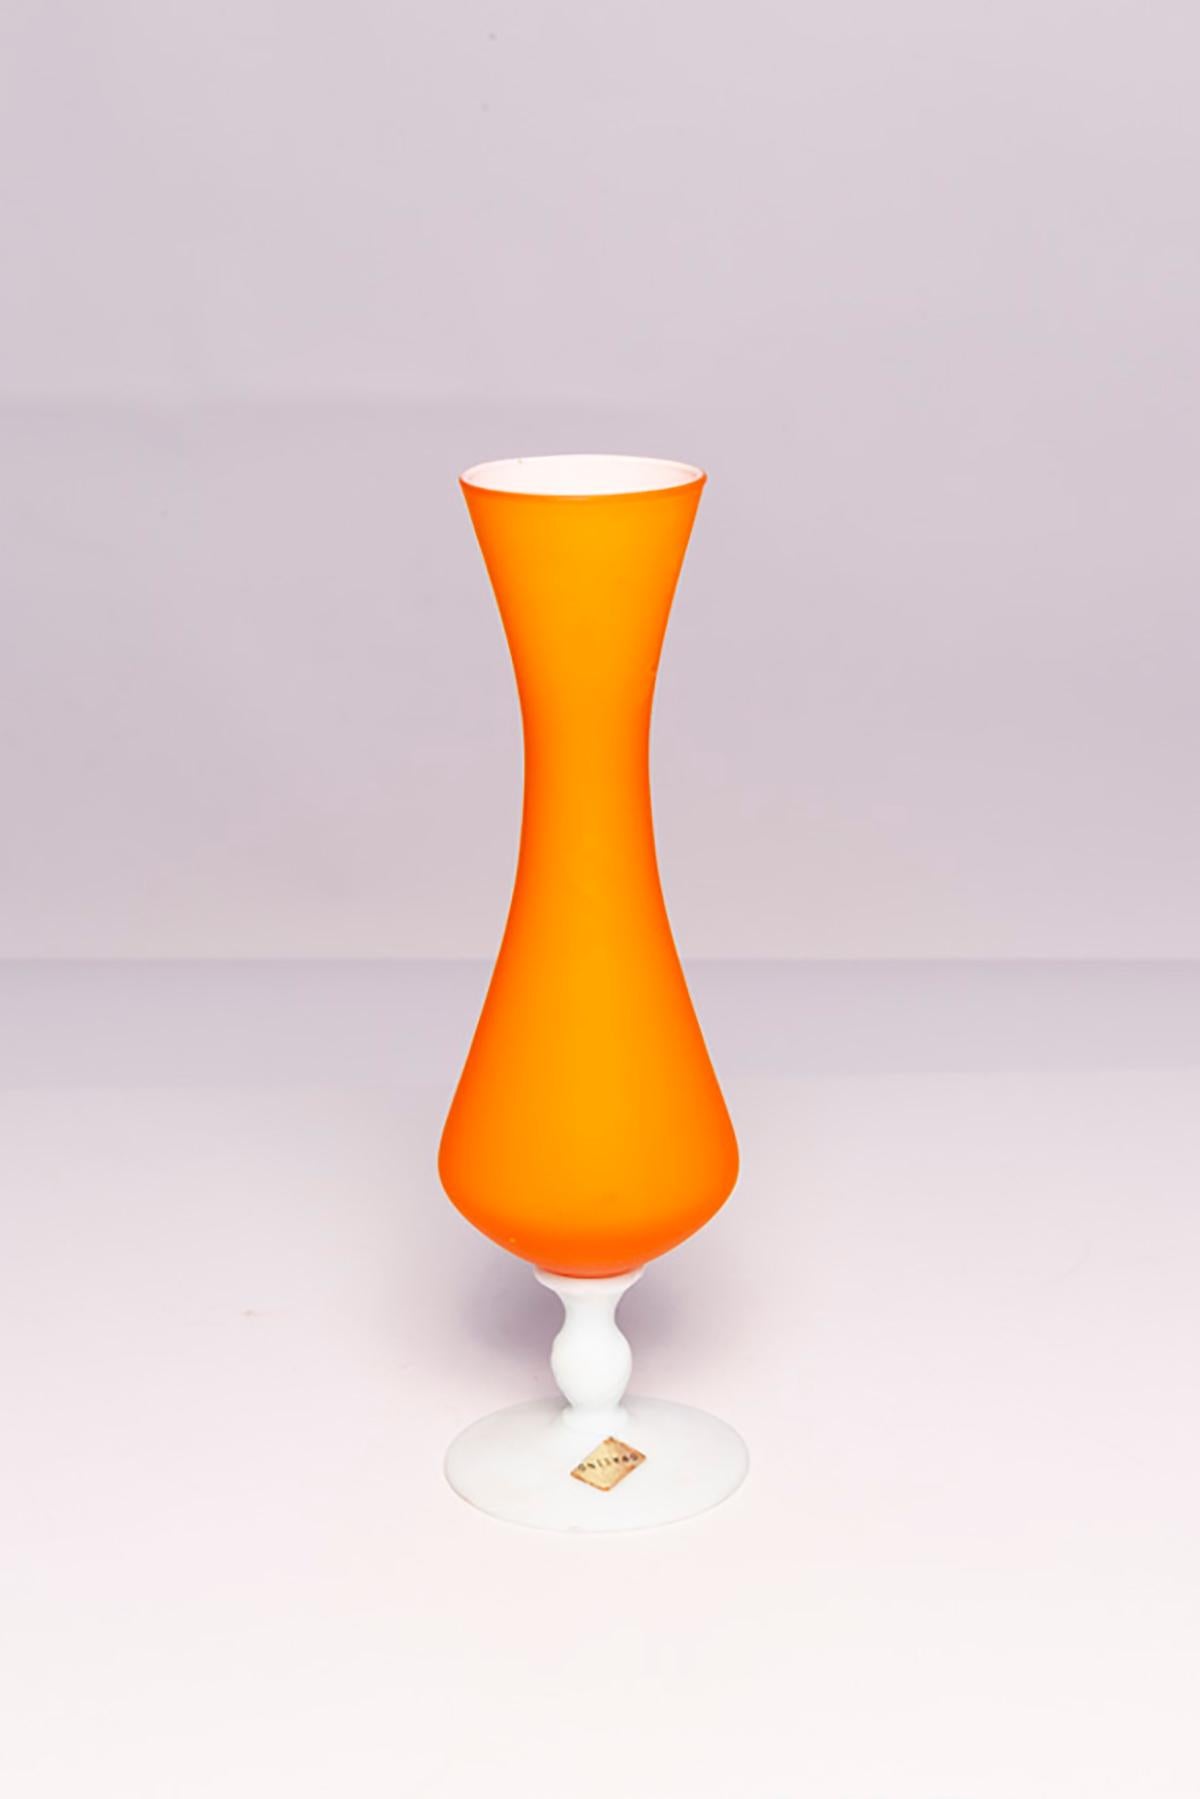 Mid Century Orange Decorative Glass Vase, Europe, 1960s For Sale 4